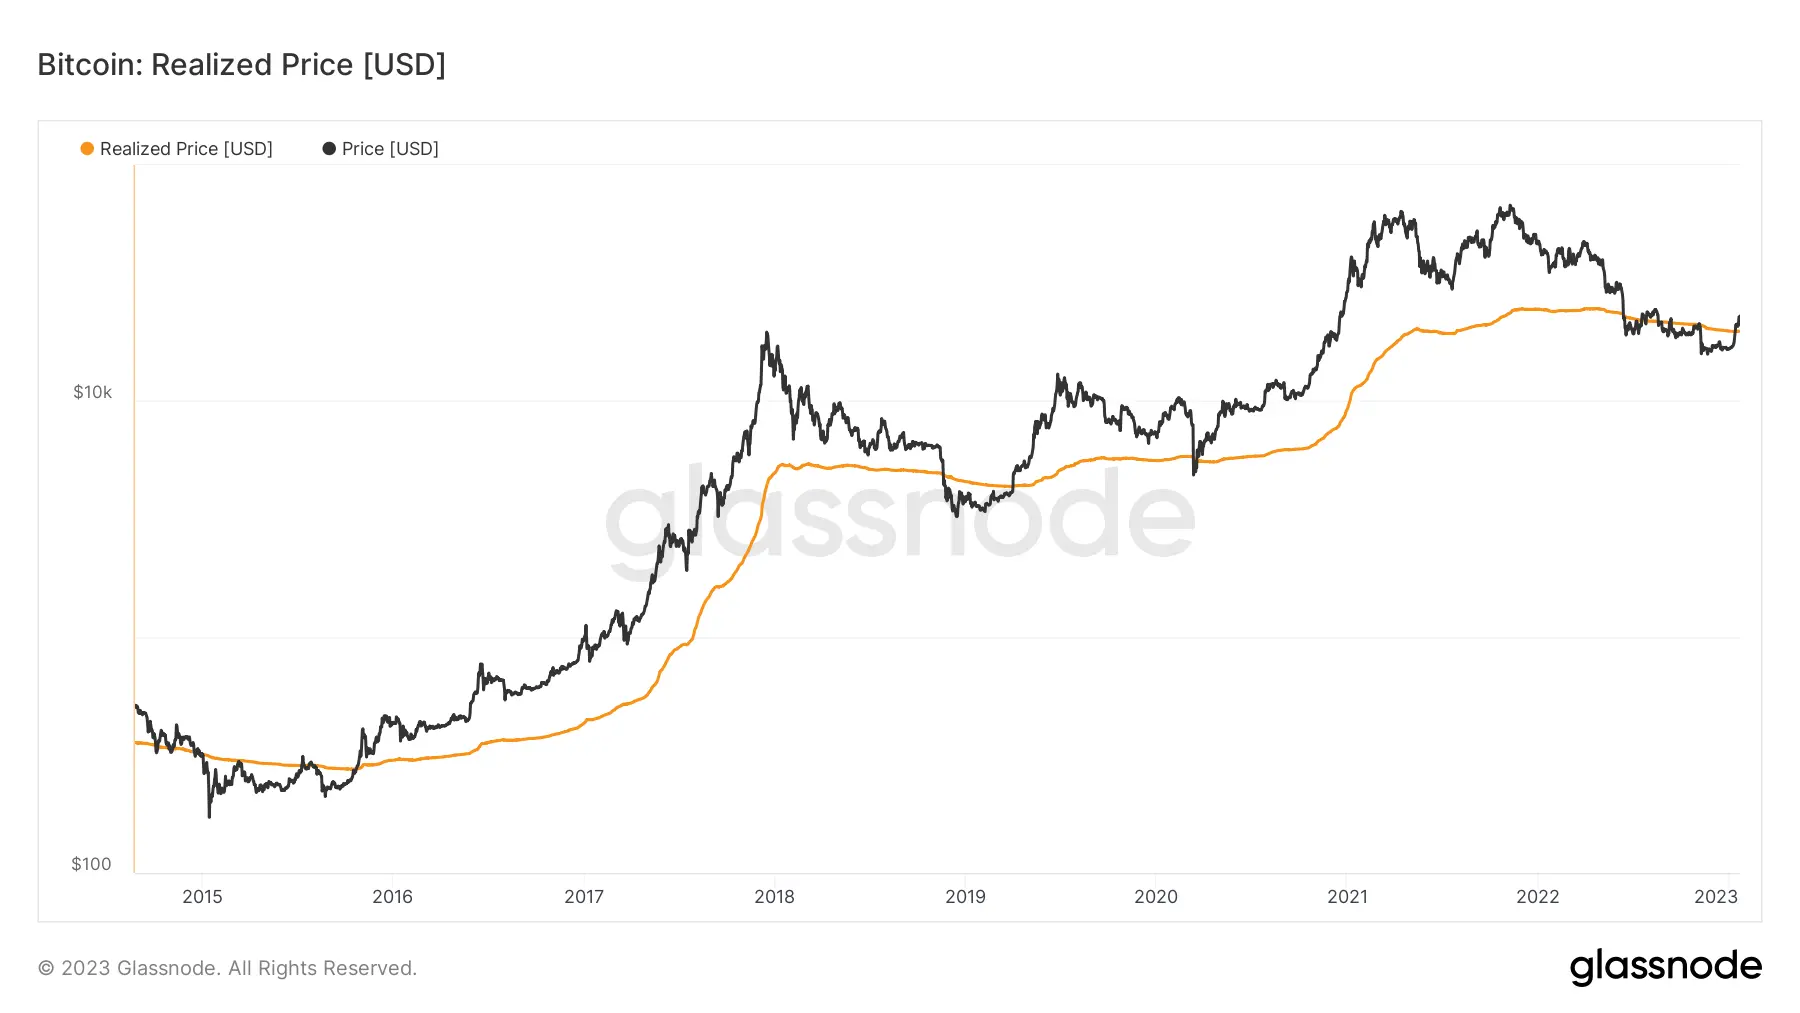 Bitcoin: Realized Price, Quelle: Glassnode